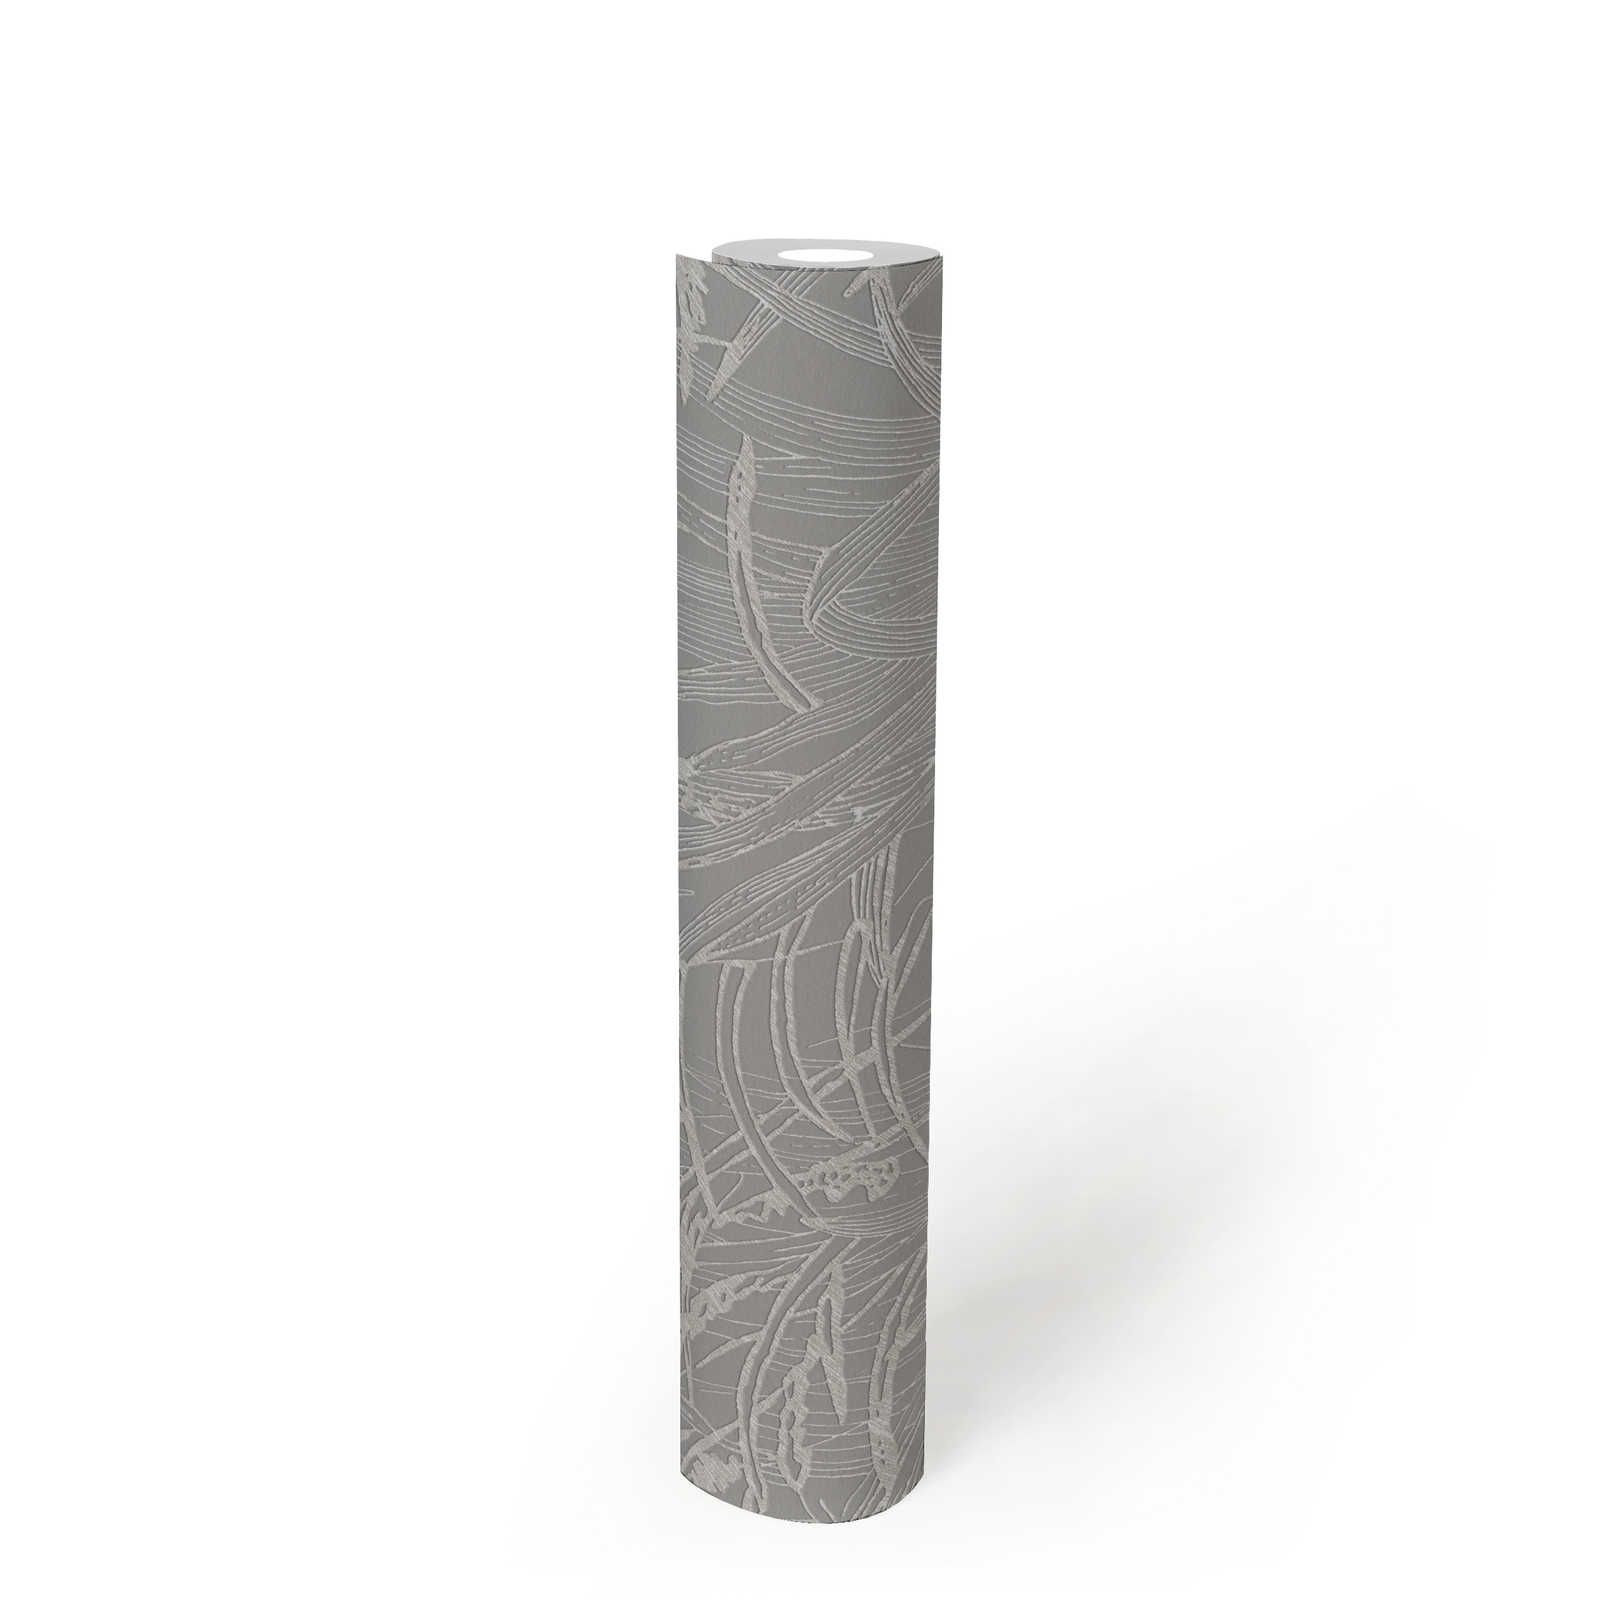             Natur Tapete Schilfblatt mit Metallic Farbe – Grau
        